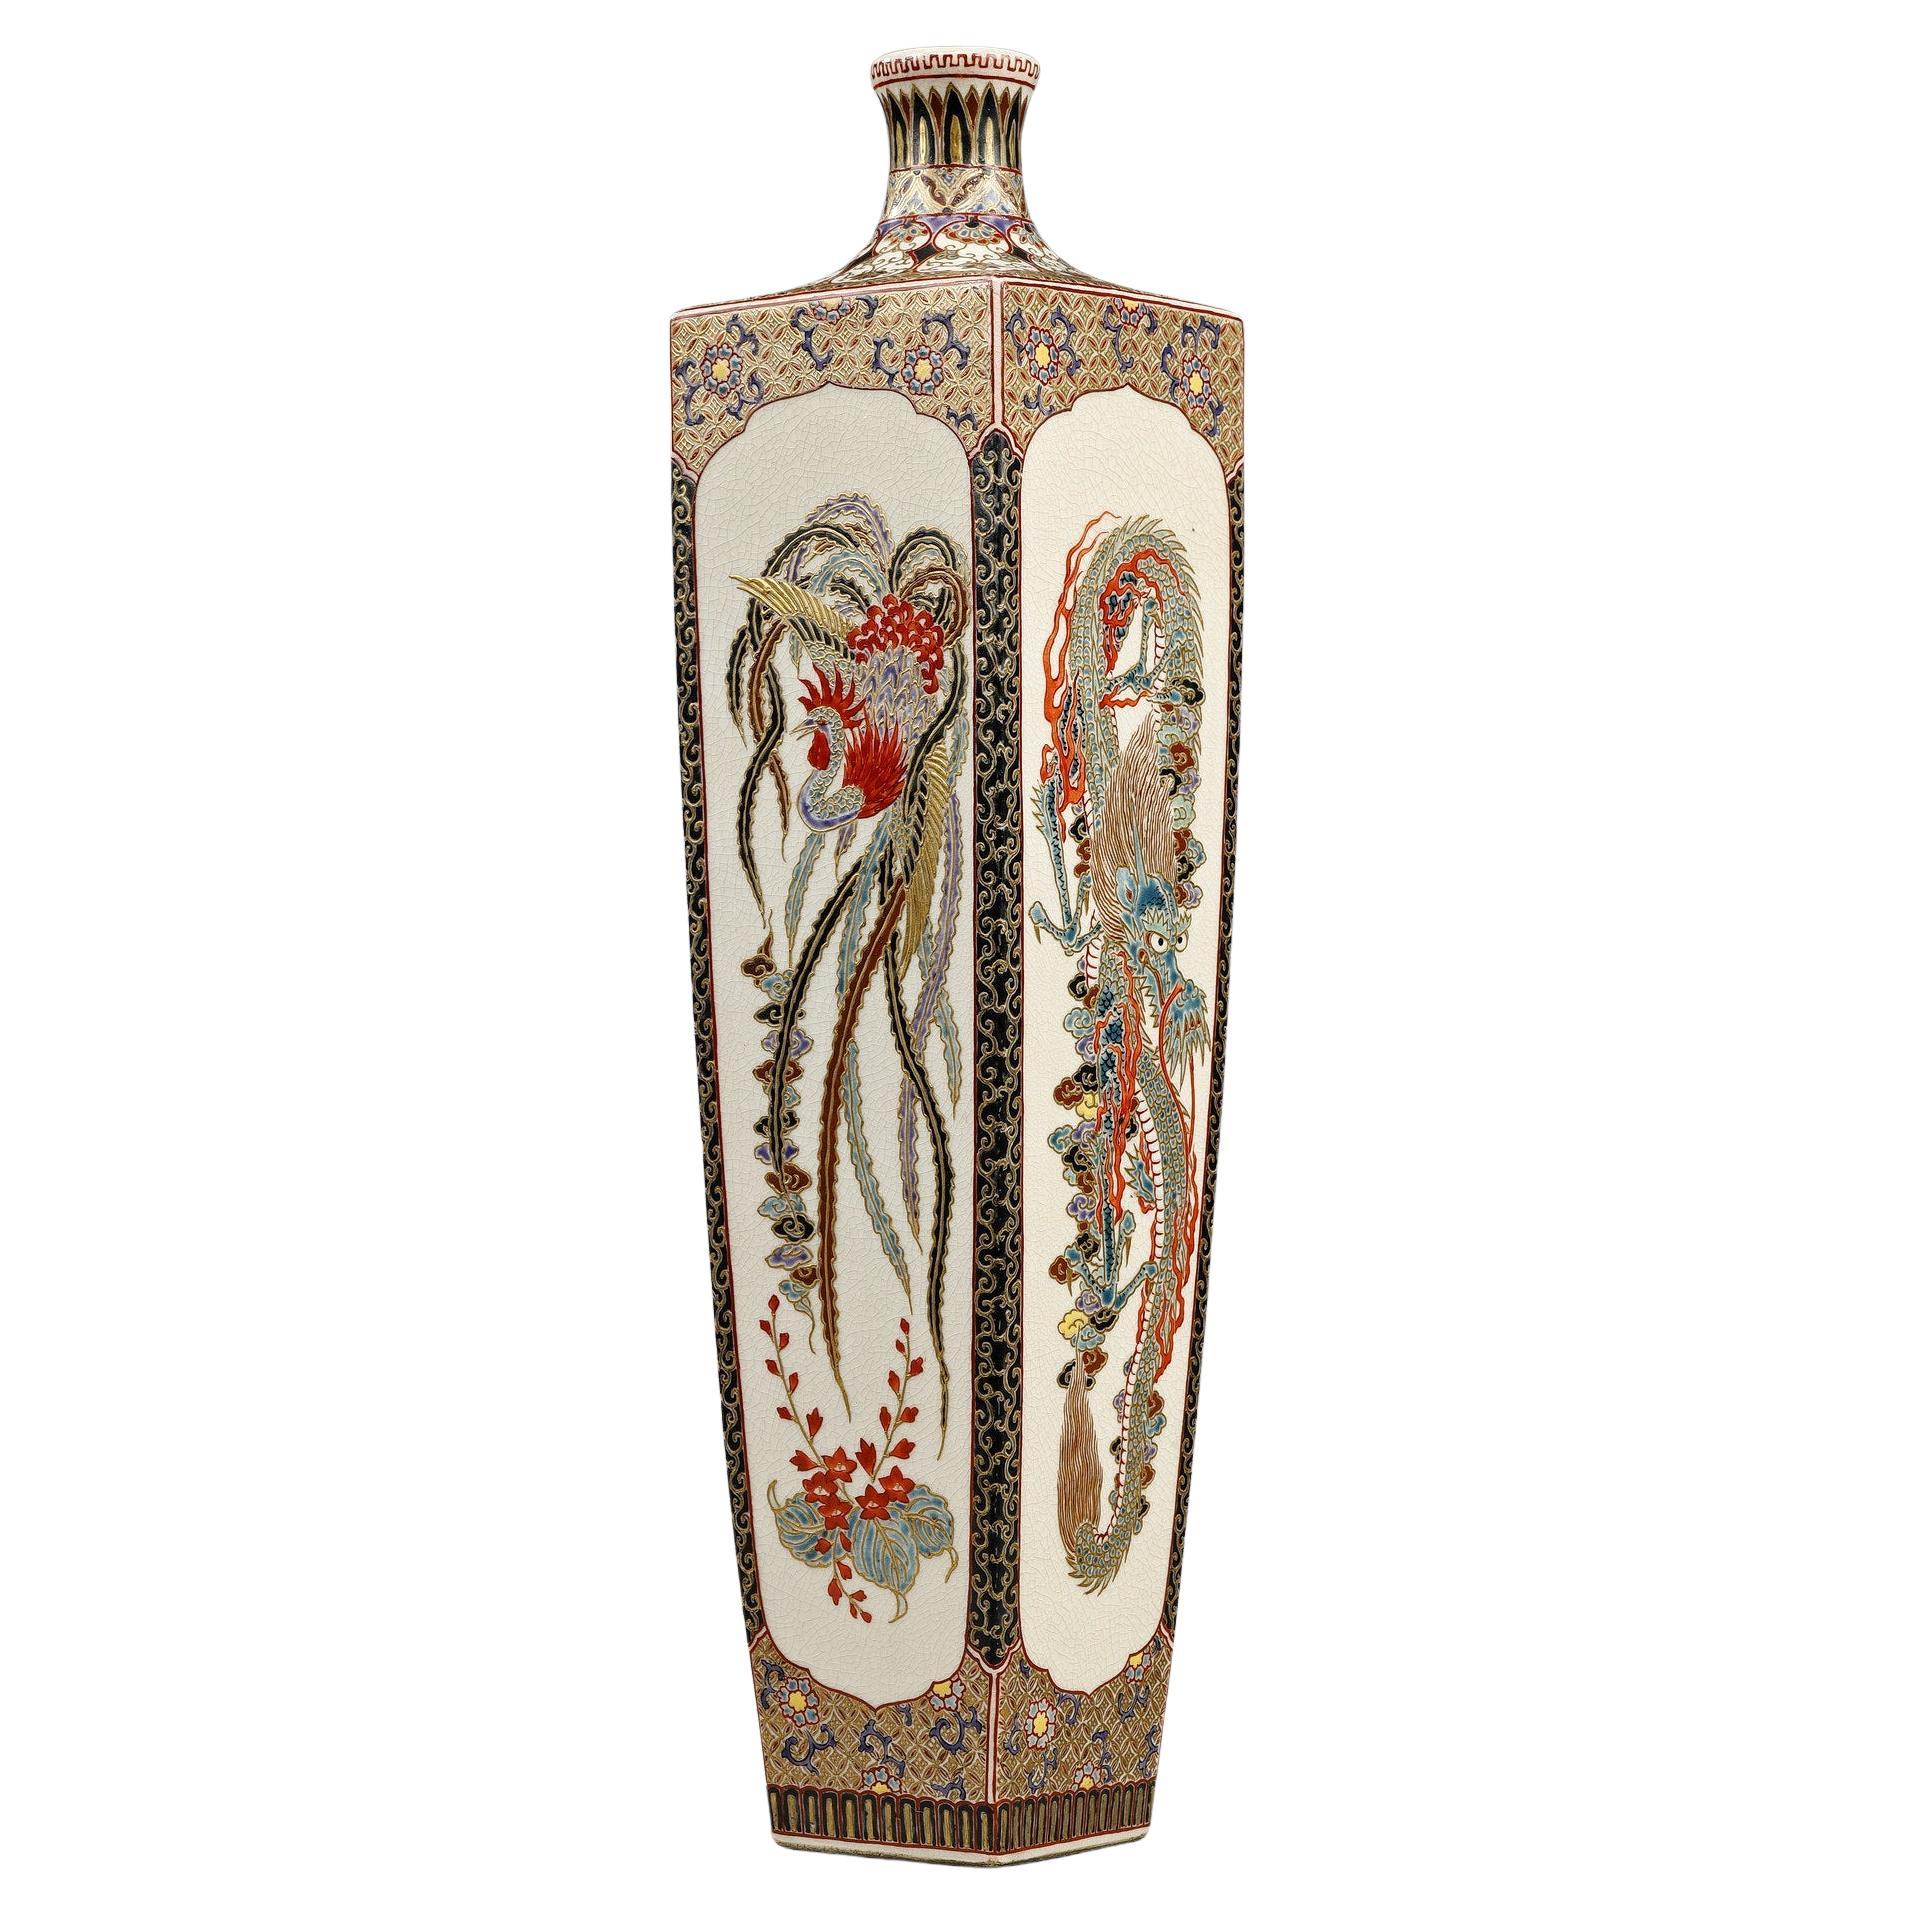 Rare satsuma vase from the Meiji Period, Japan 